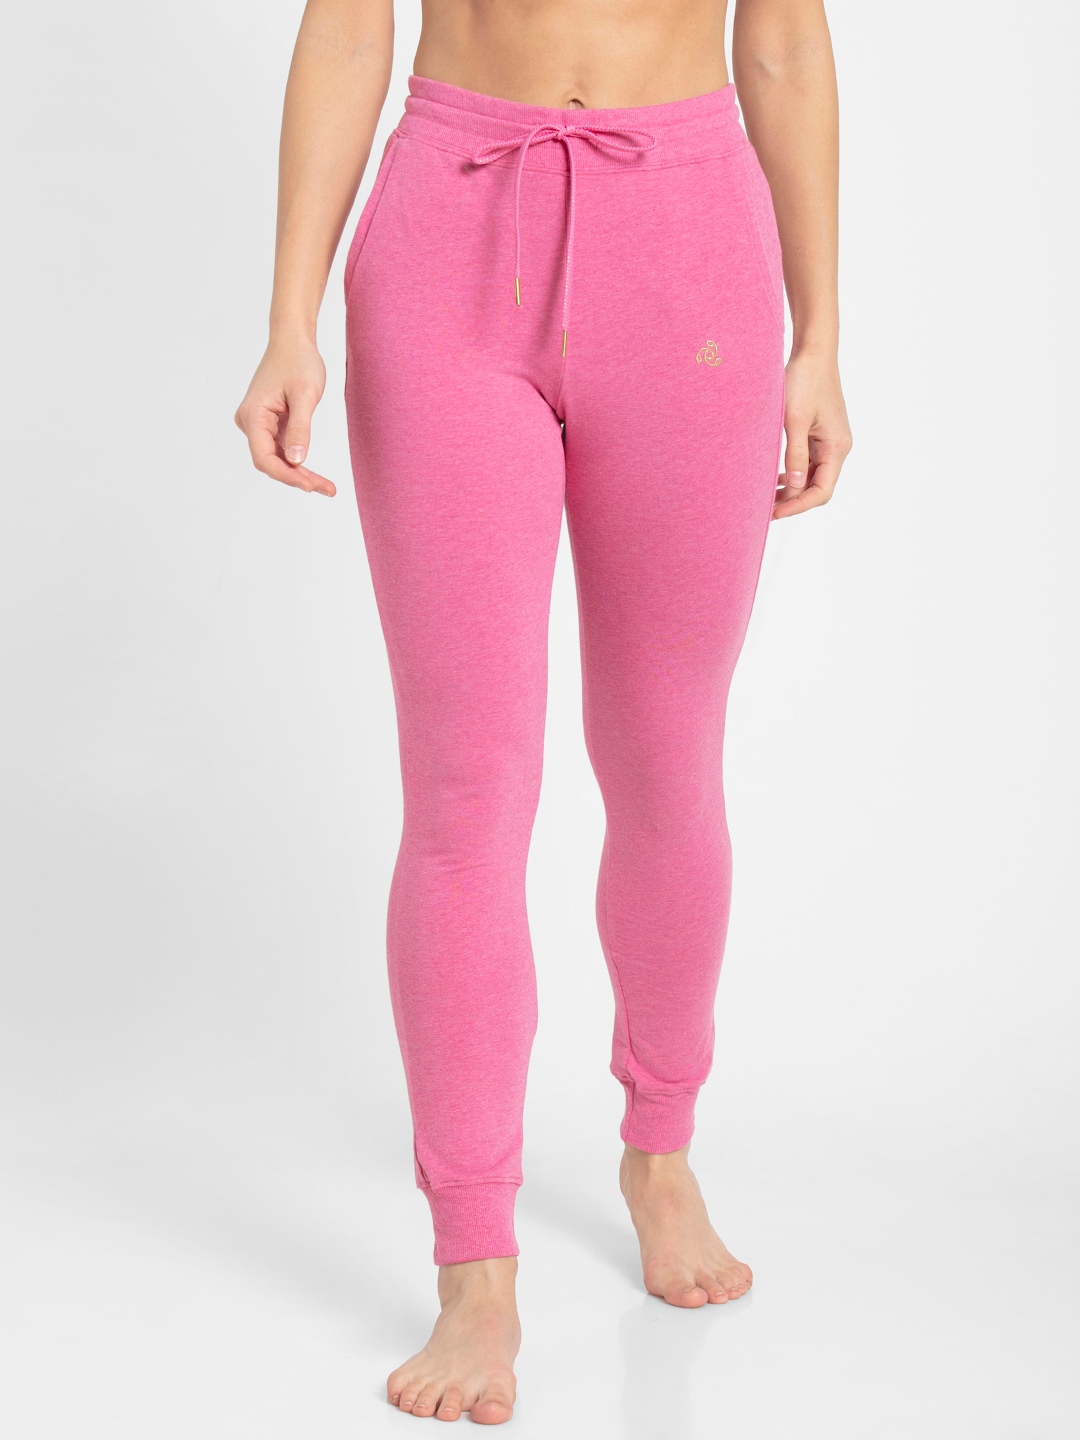 Jockey Women Pink Slim Fit Lounge Pants 1323-0103 Price in India